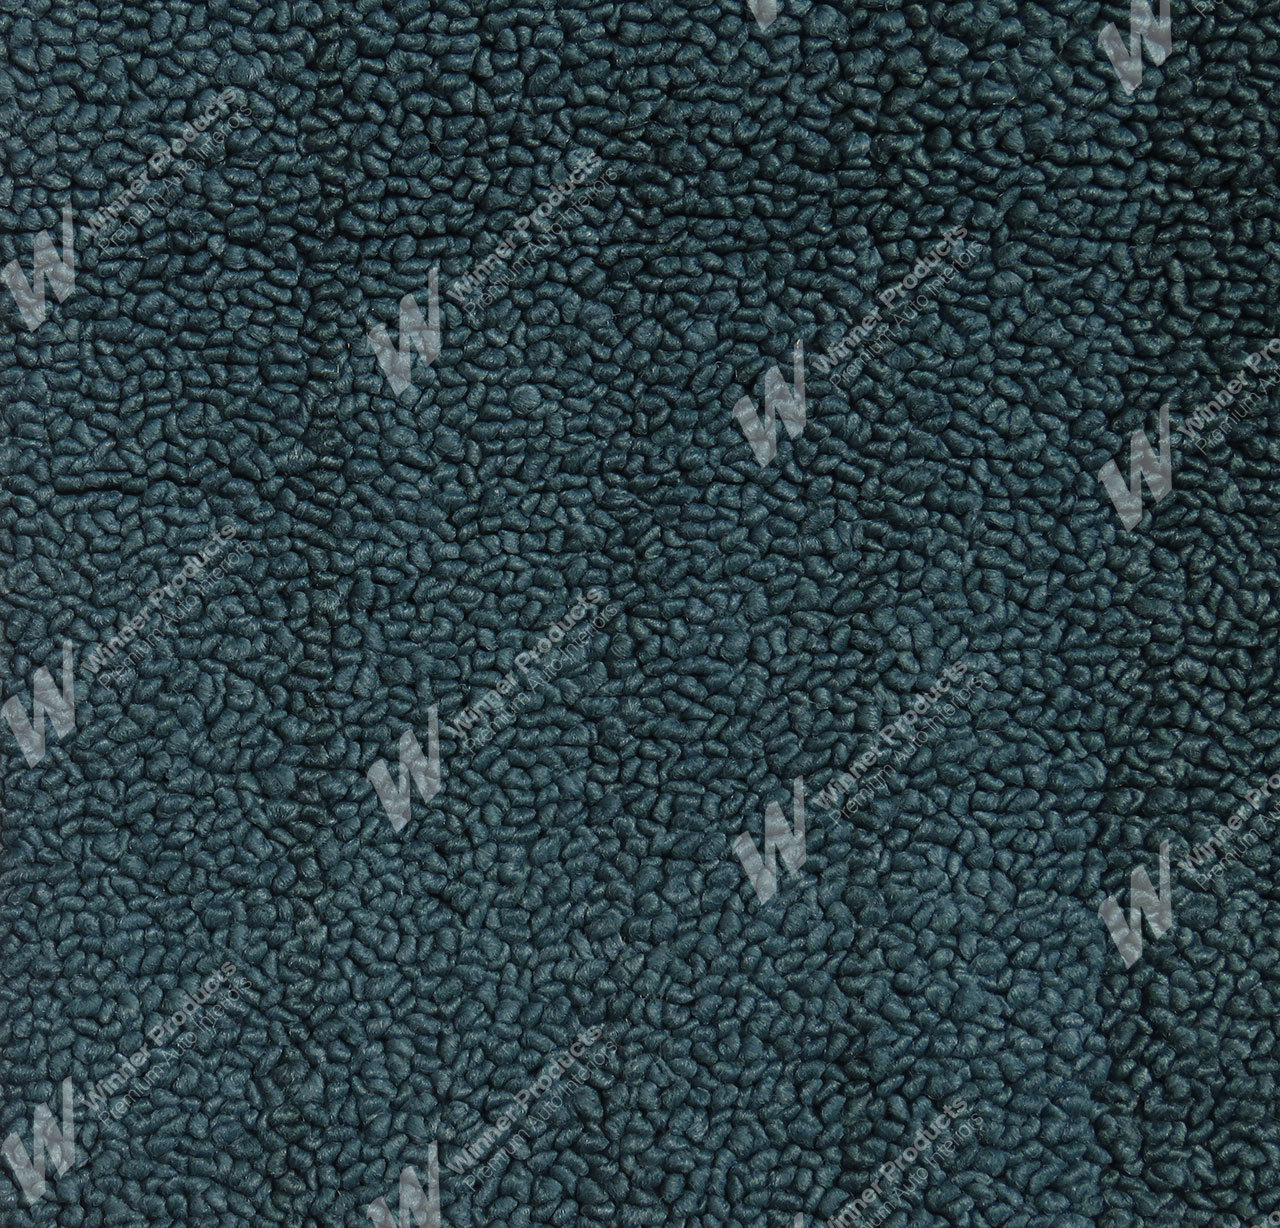 Holden Kingswood HG Kingswood Wagon 13E Turquoise Mist Carpet (Image 1 of 1)